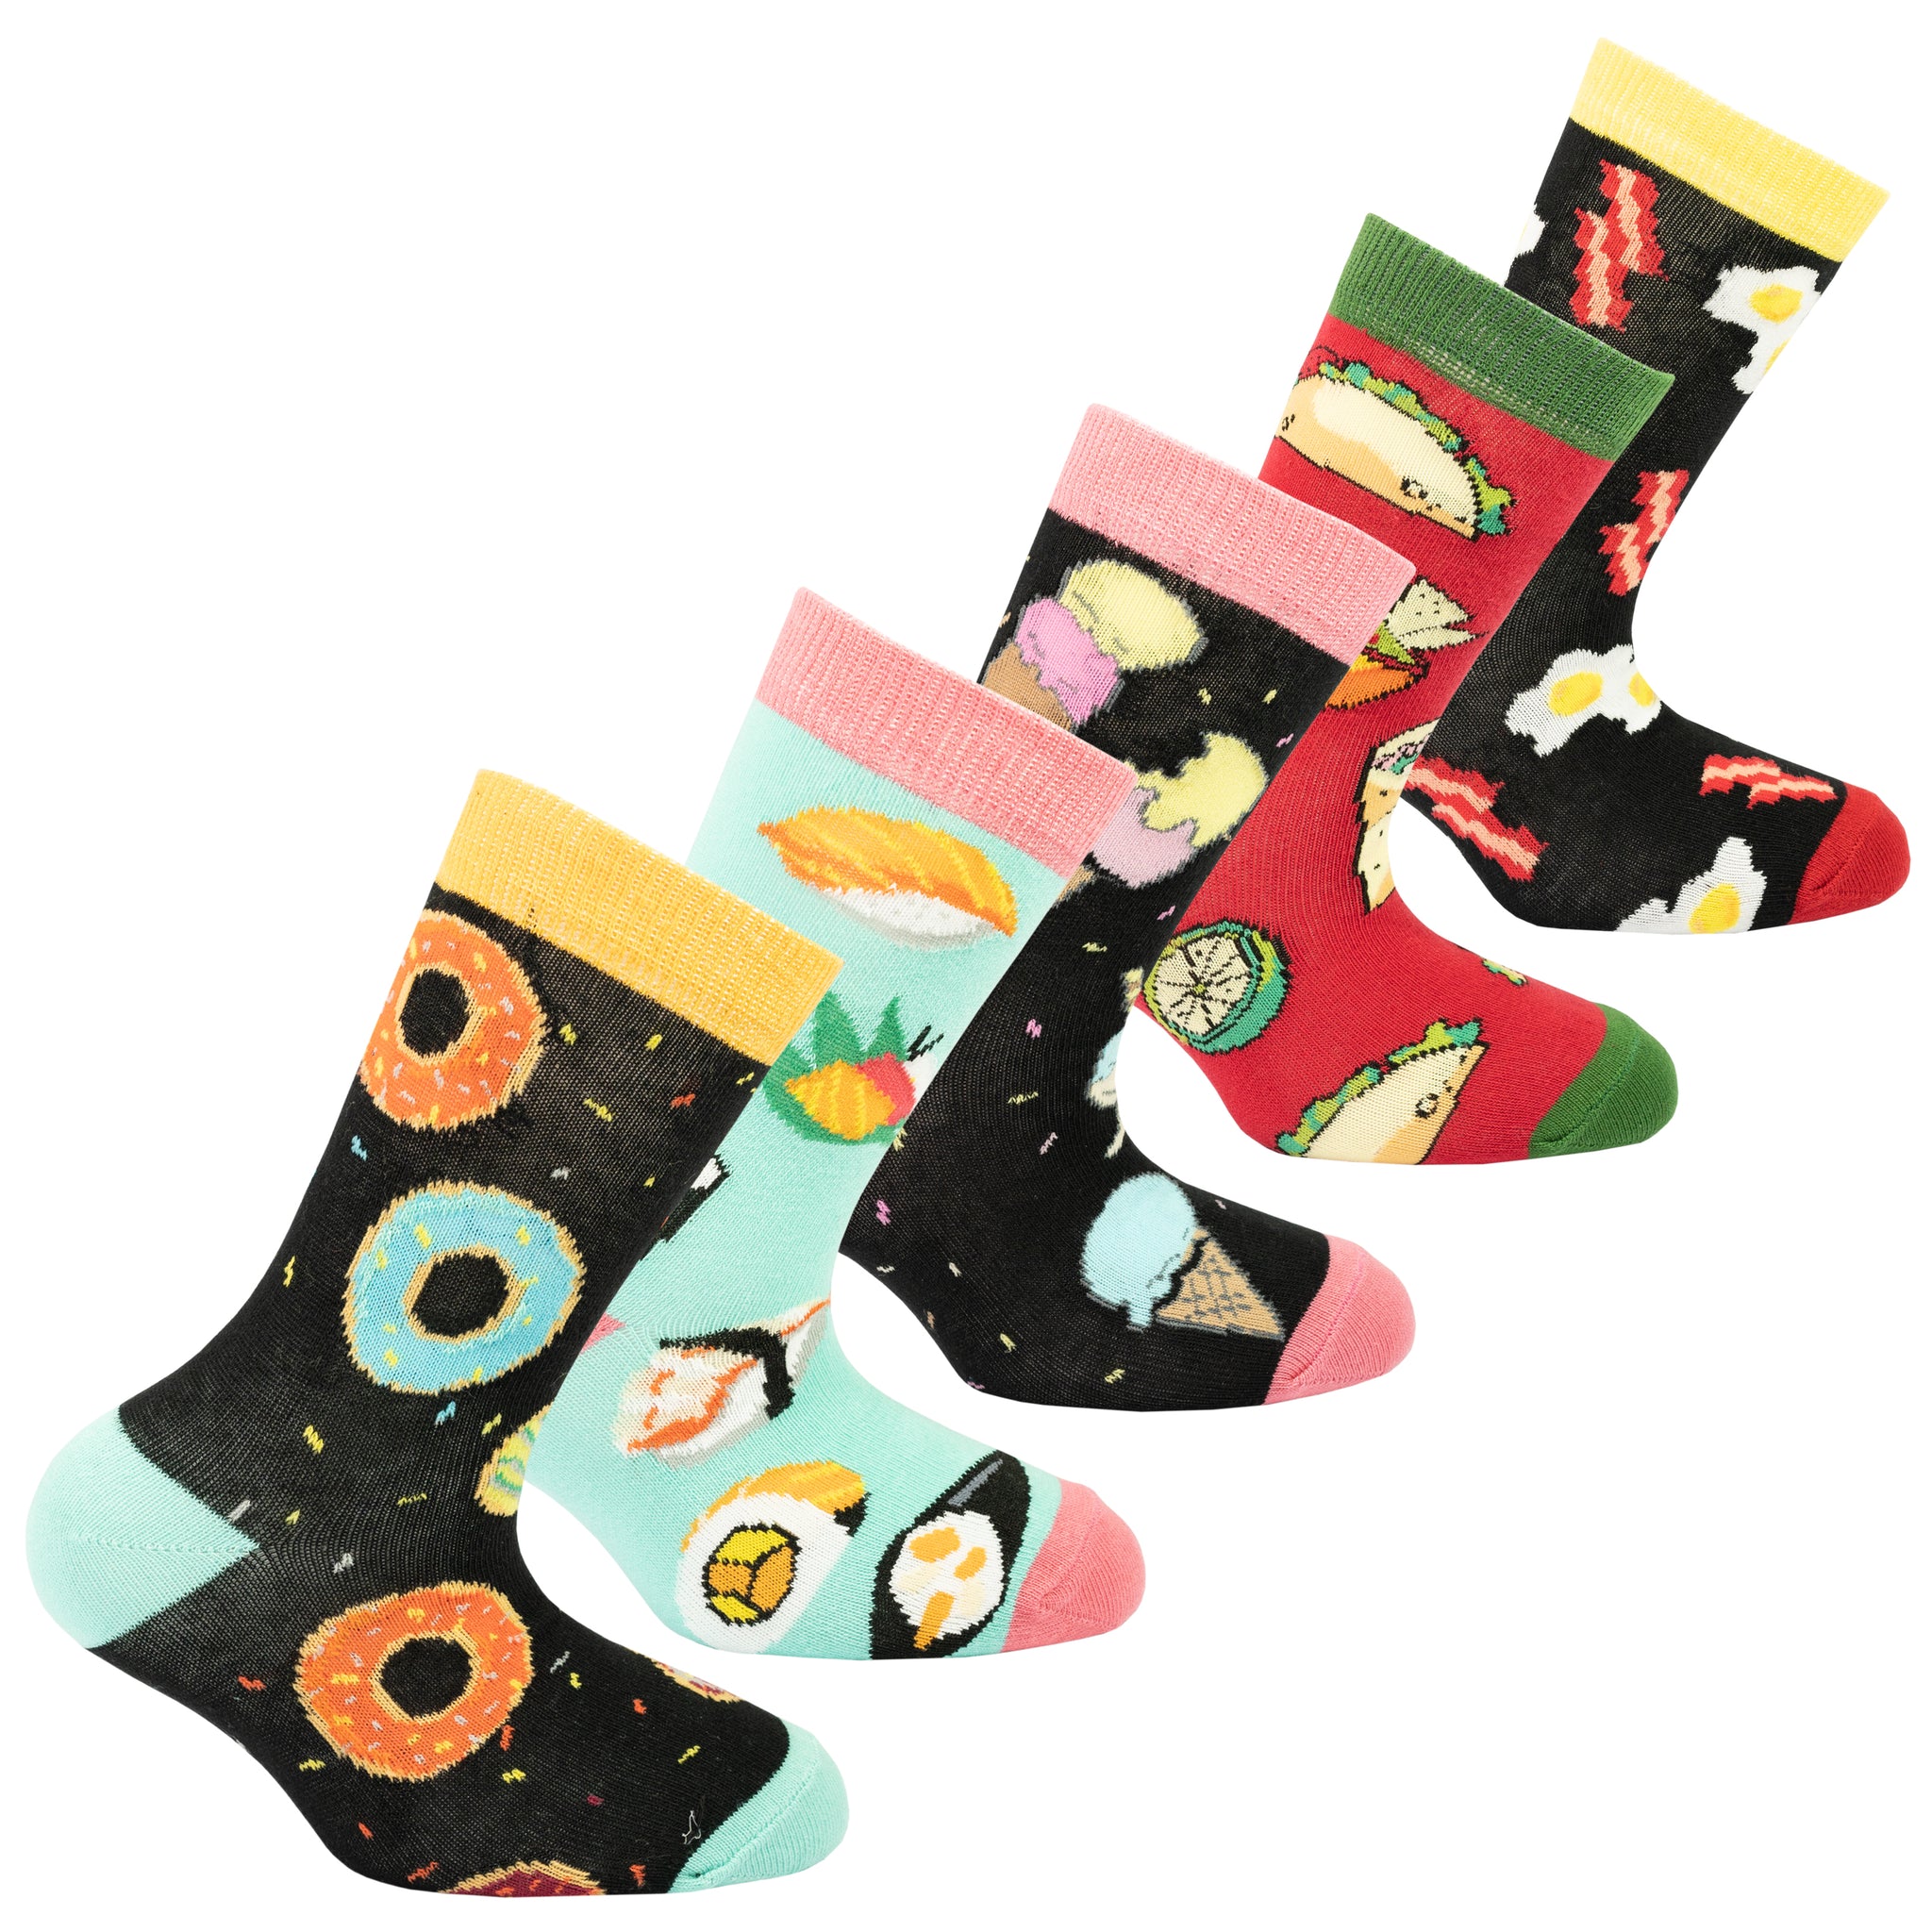 Kids Fast Food Socks 5-Pack colorful